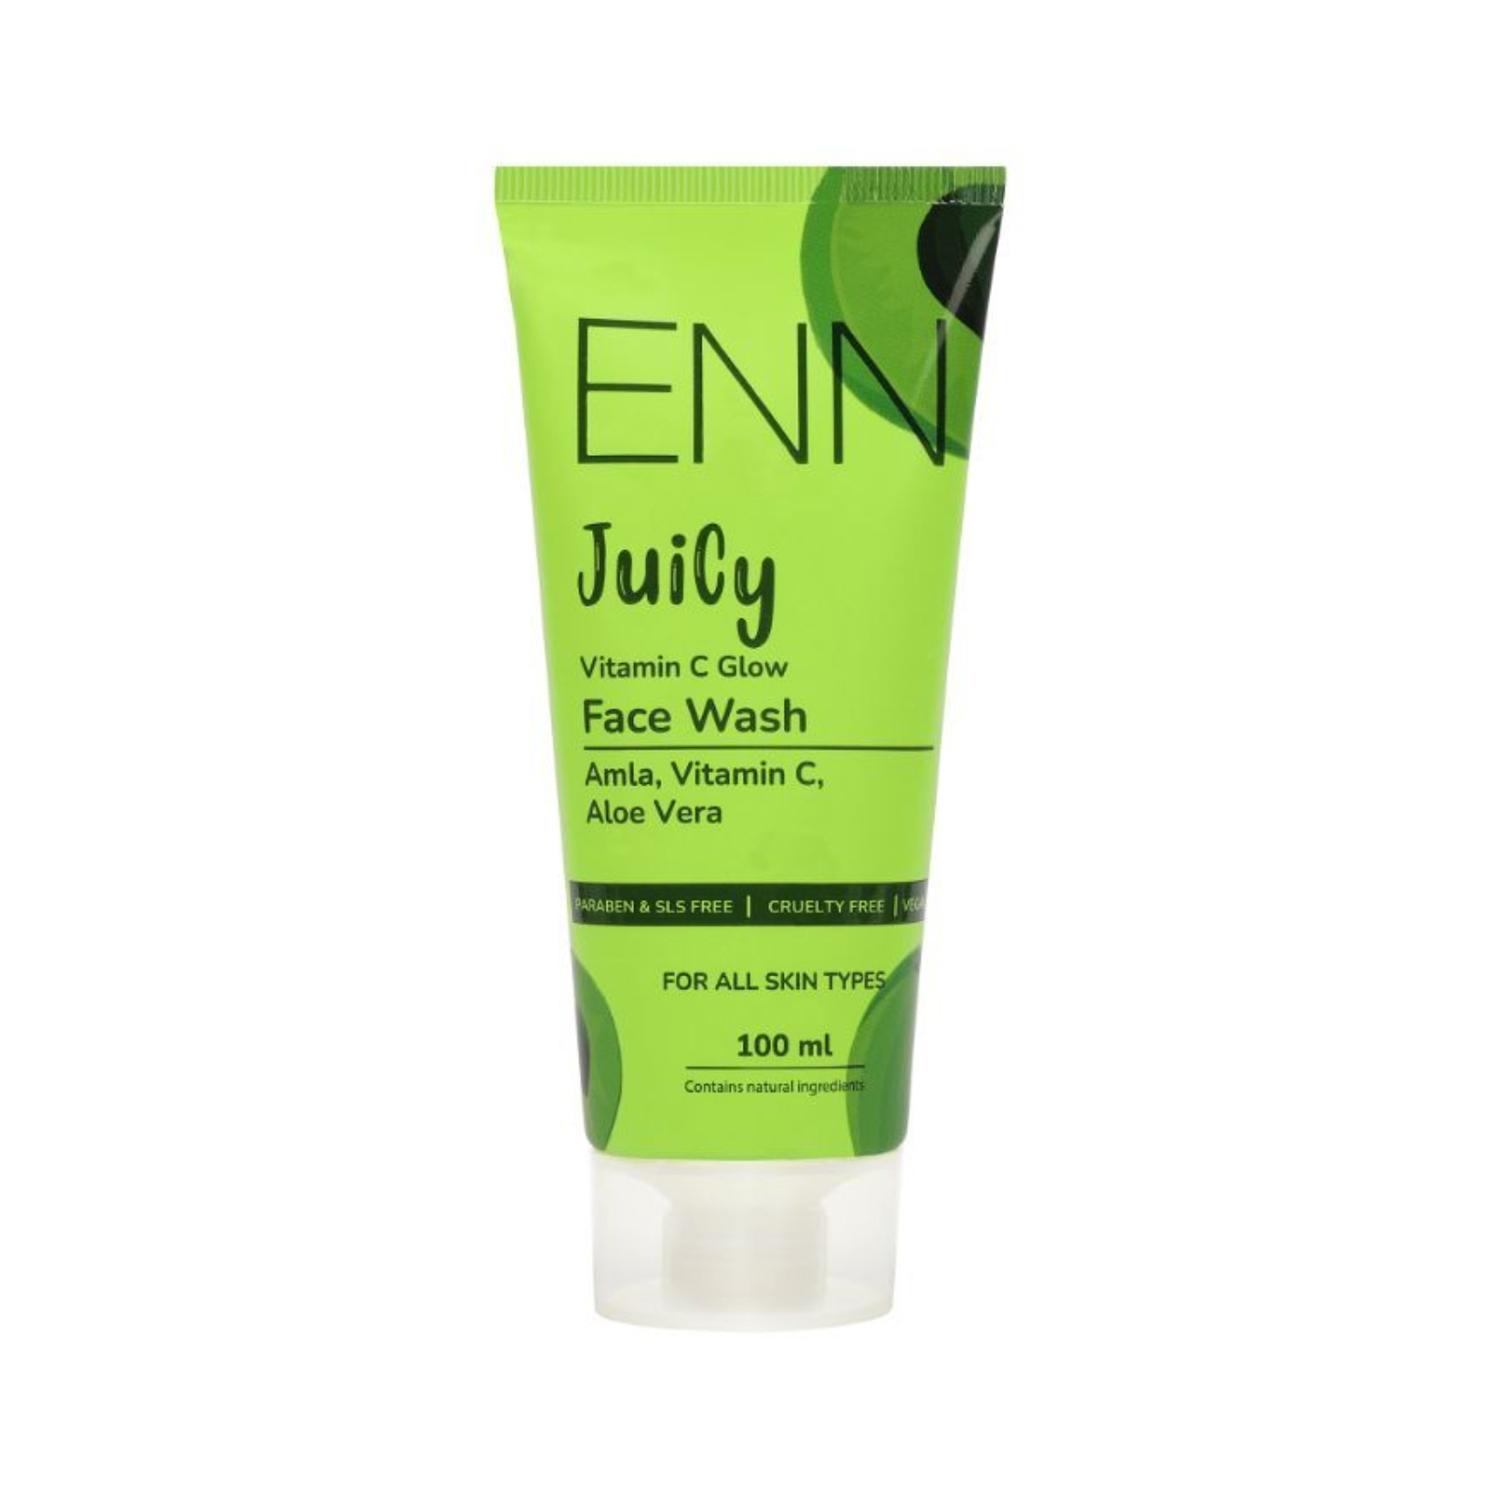 enn juicy vitamin c glow face wash (100ml)